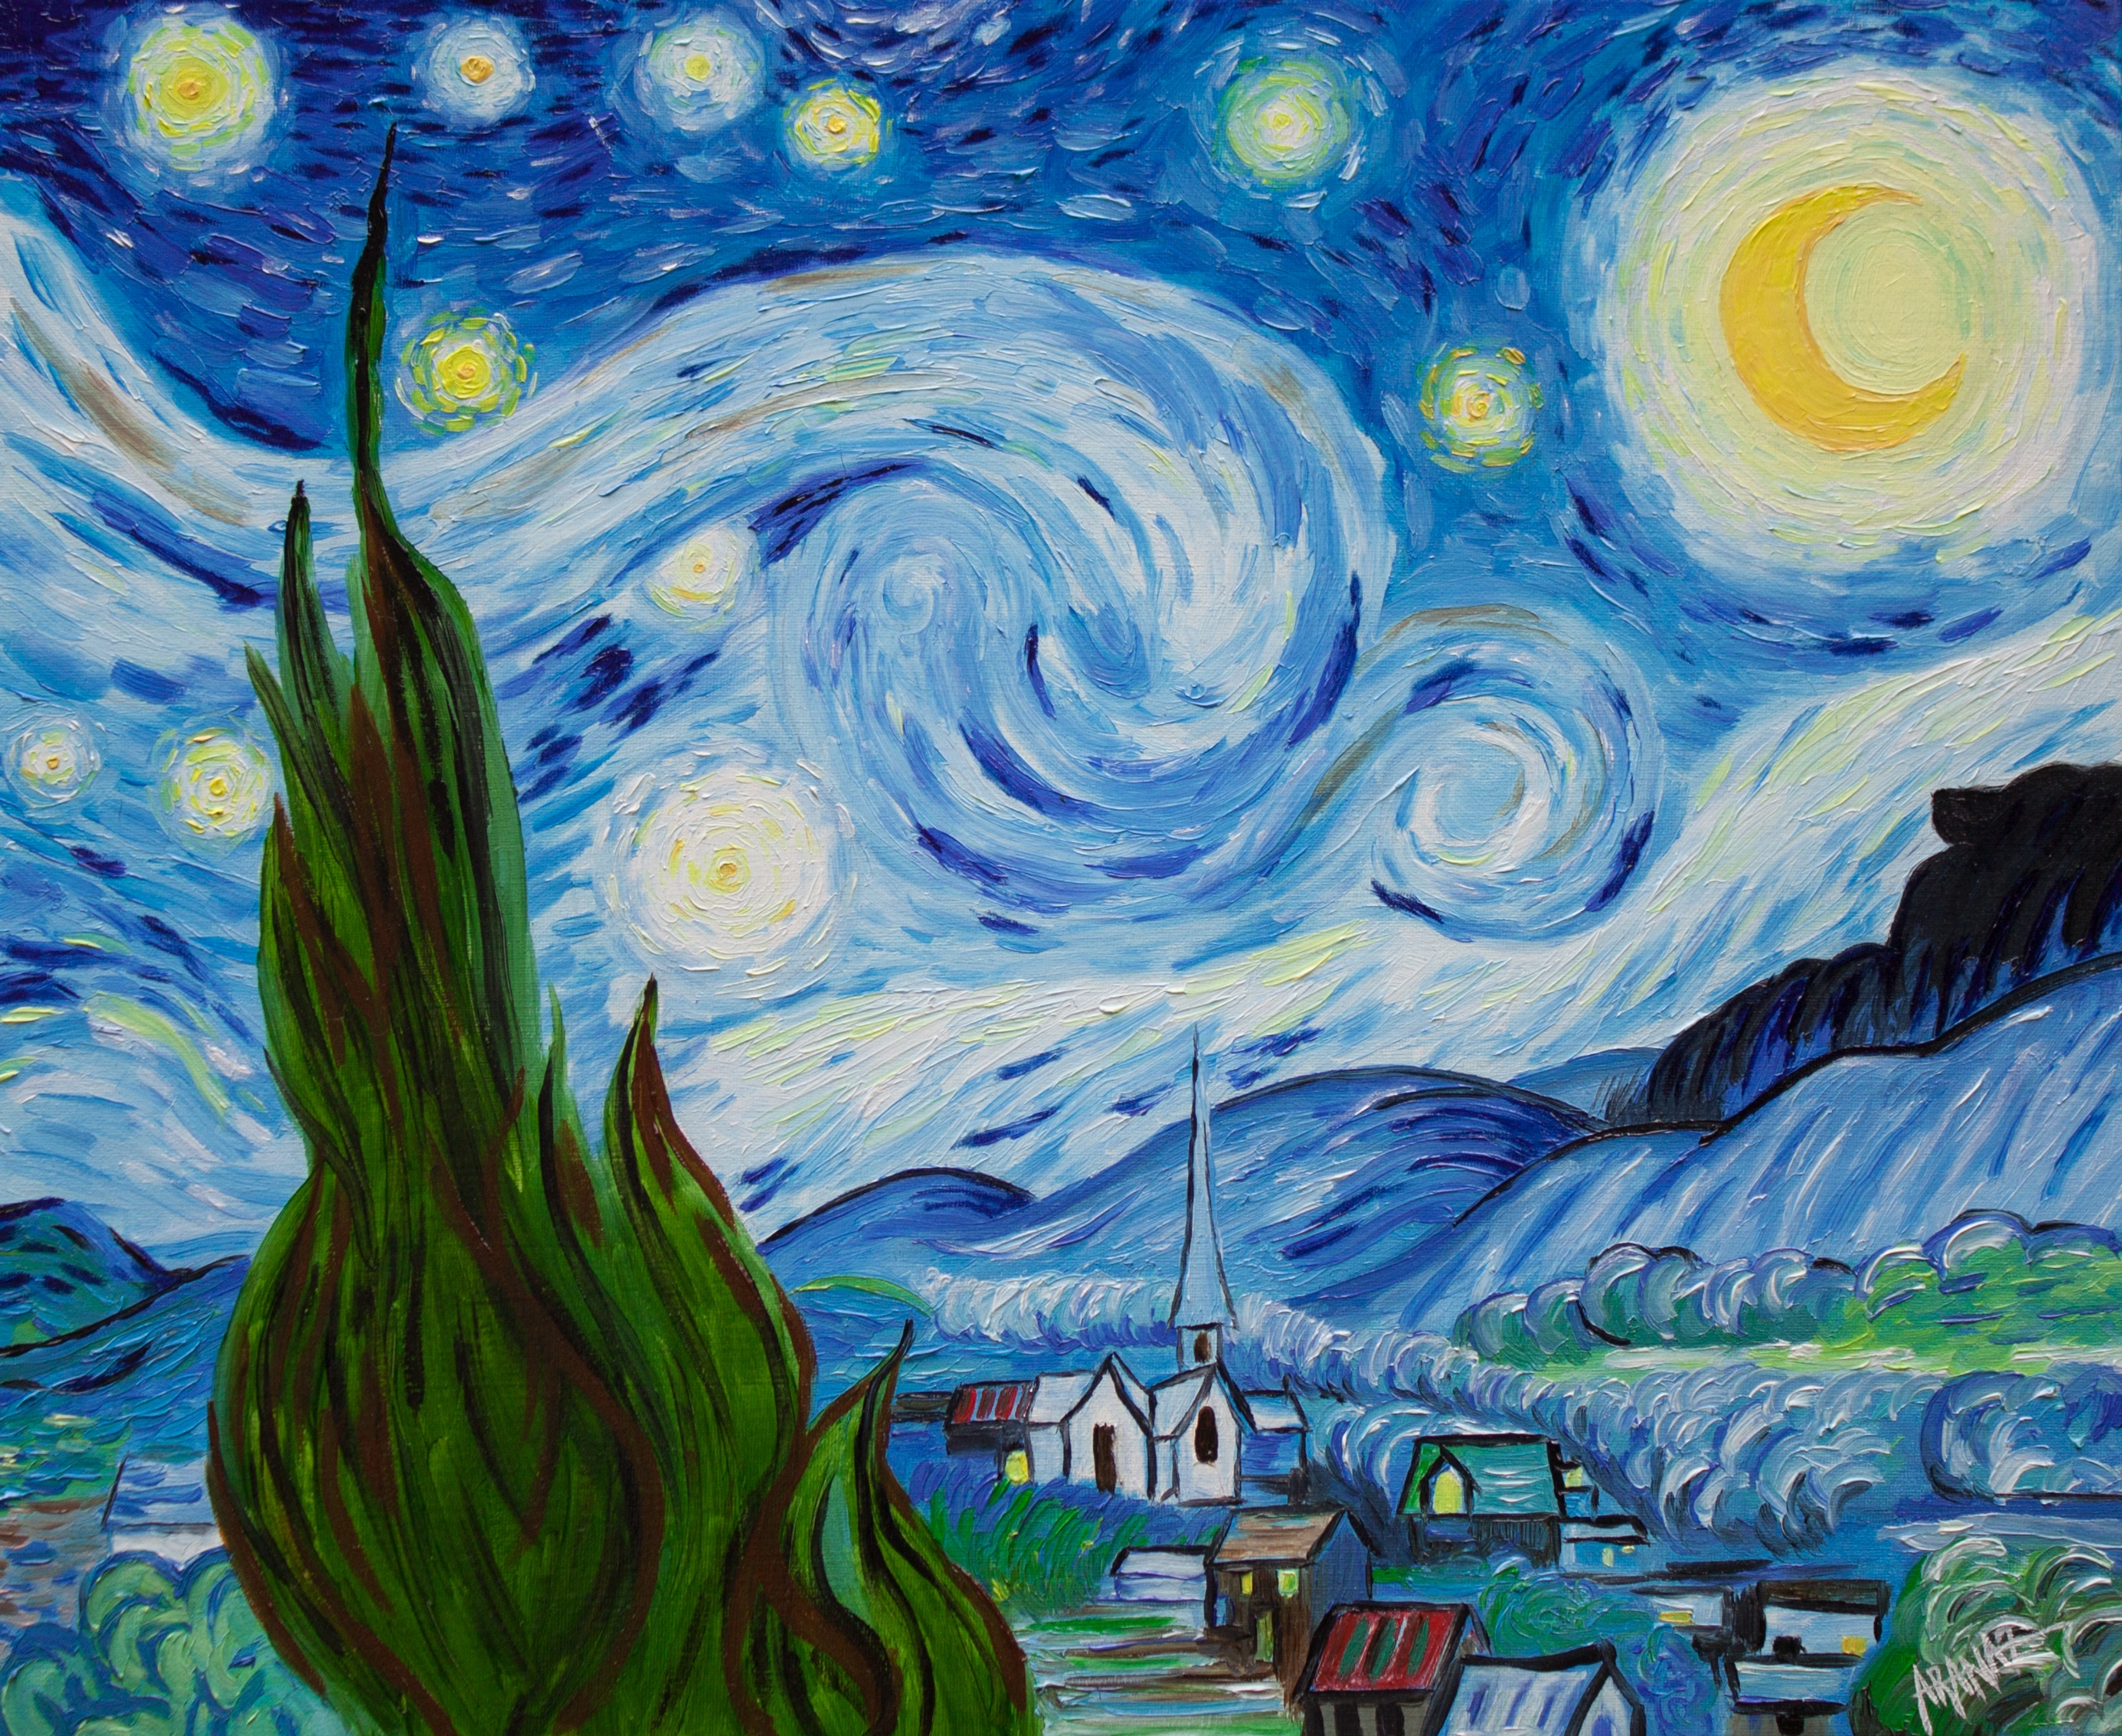 Starry Night (Van Gogh) La noche estrellada (Réplica)